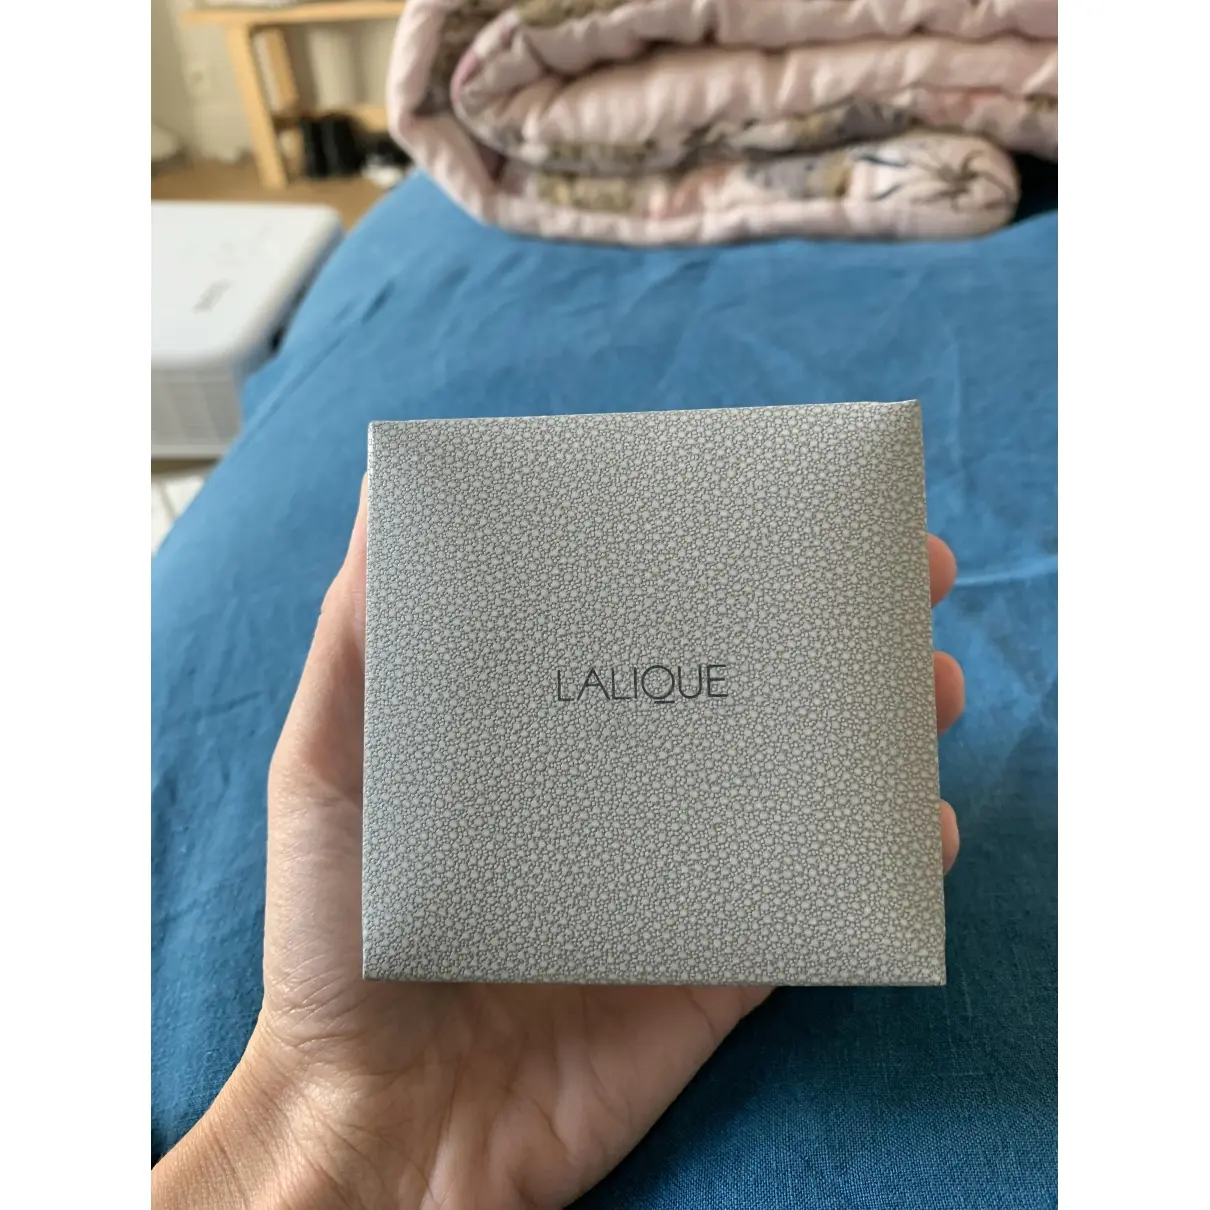 Buy Lalique Crystal pendant online